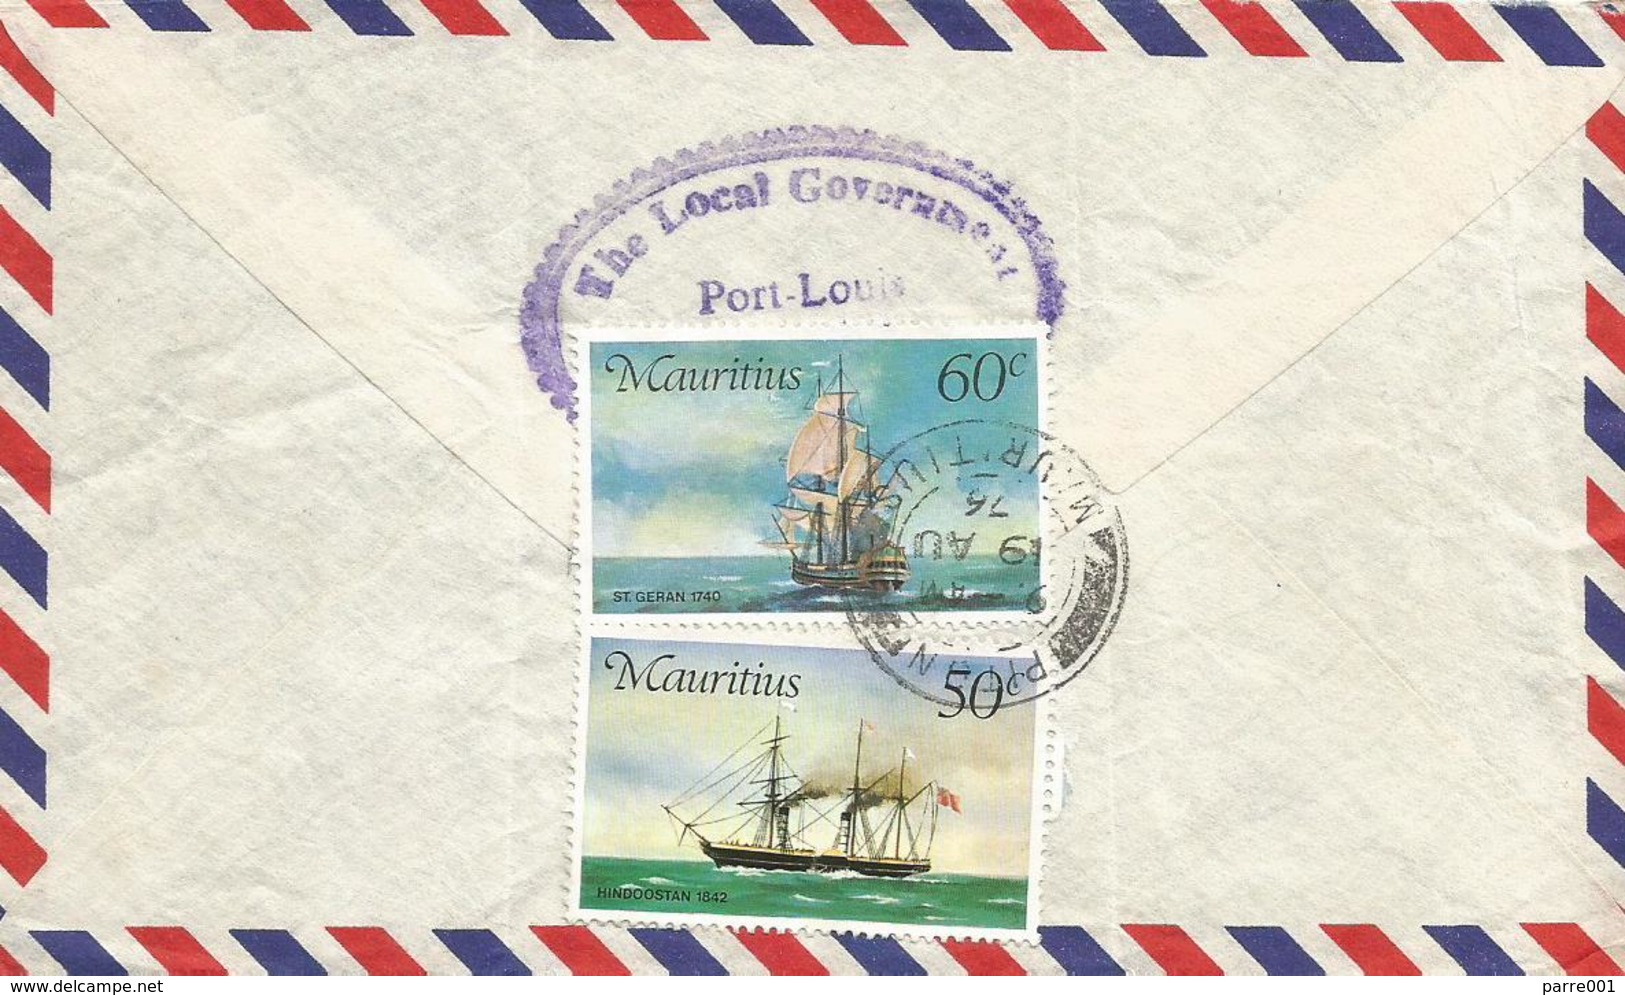 Mauritius 1976 Piton Schooner Saling Ship 50c 60c Registered Cover - Maurice (1968-...)